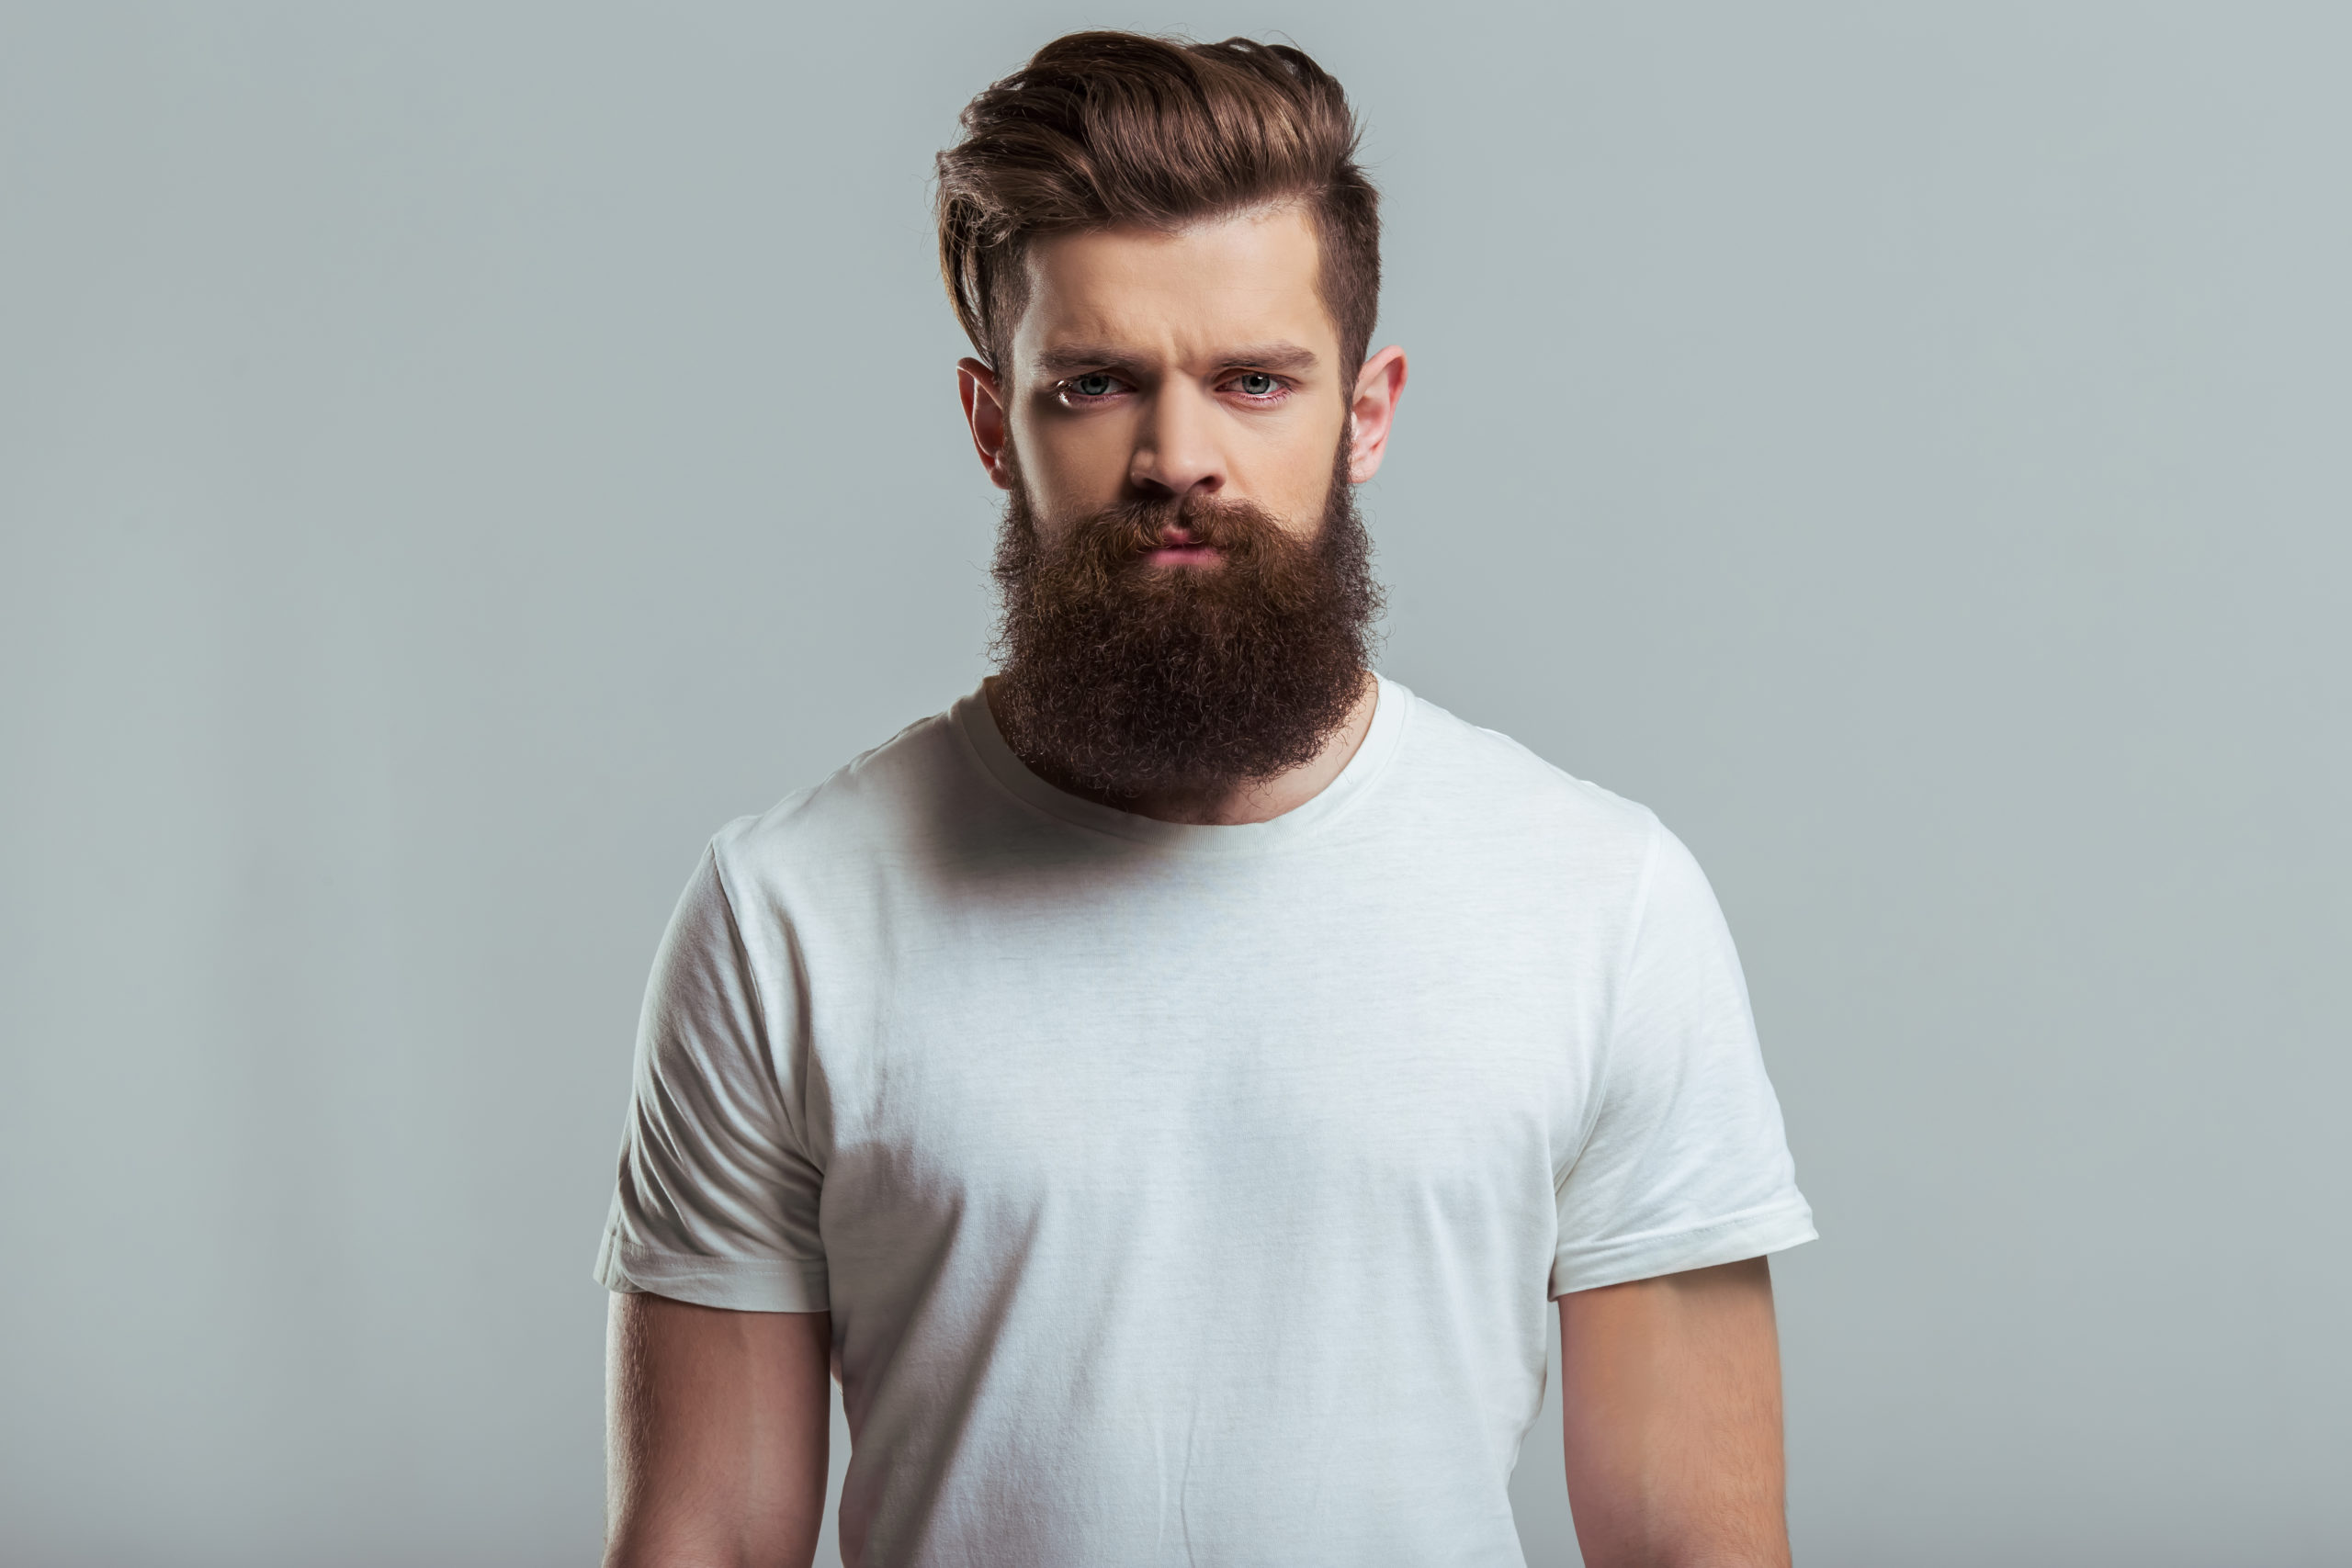 Tips for maintaining a beard